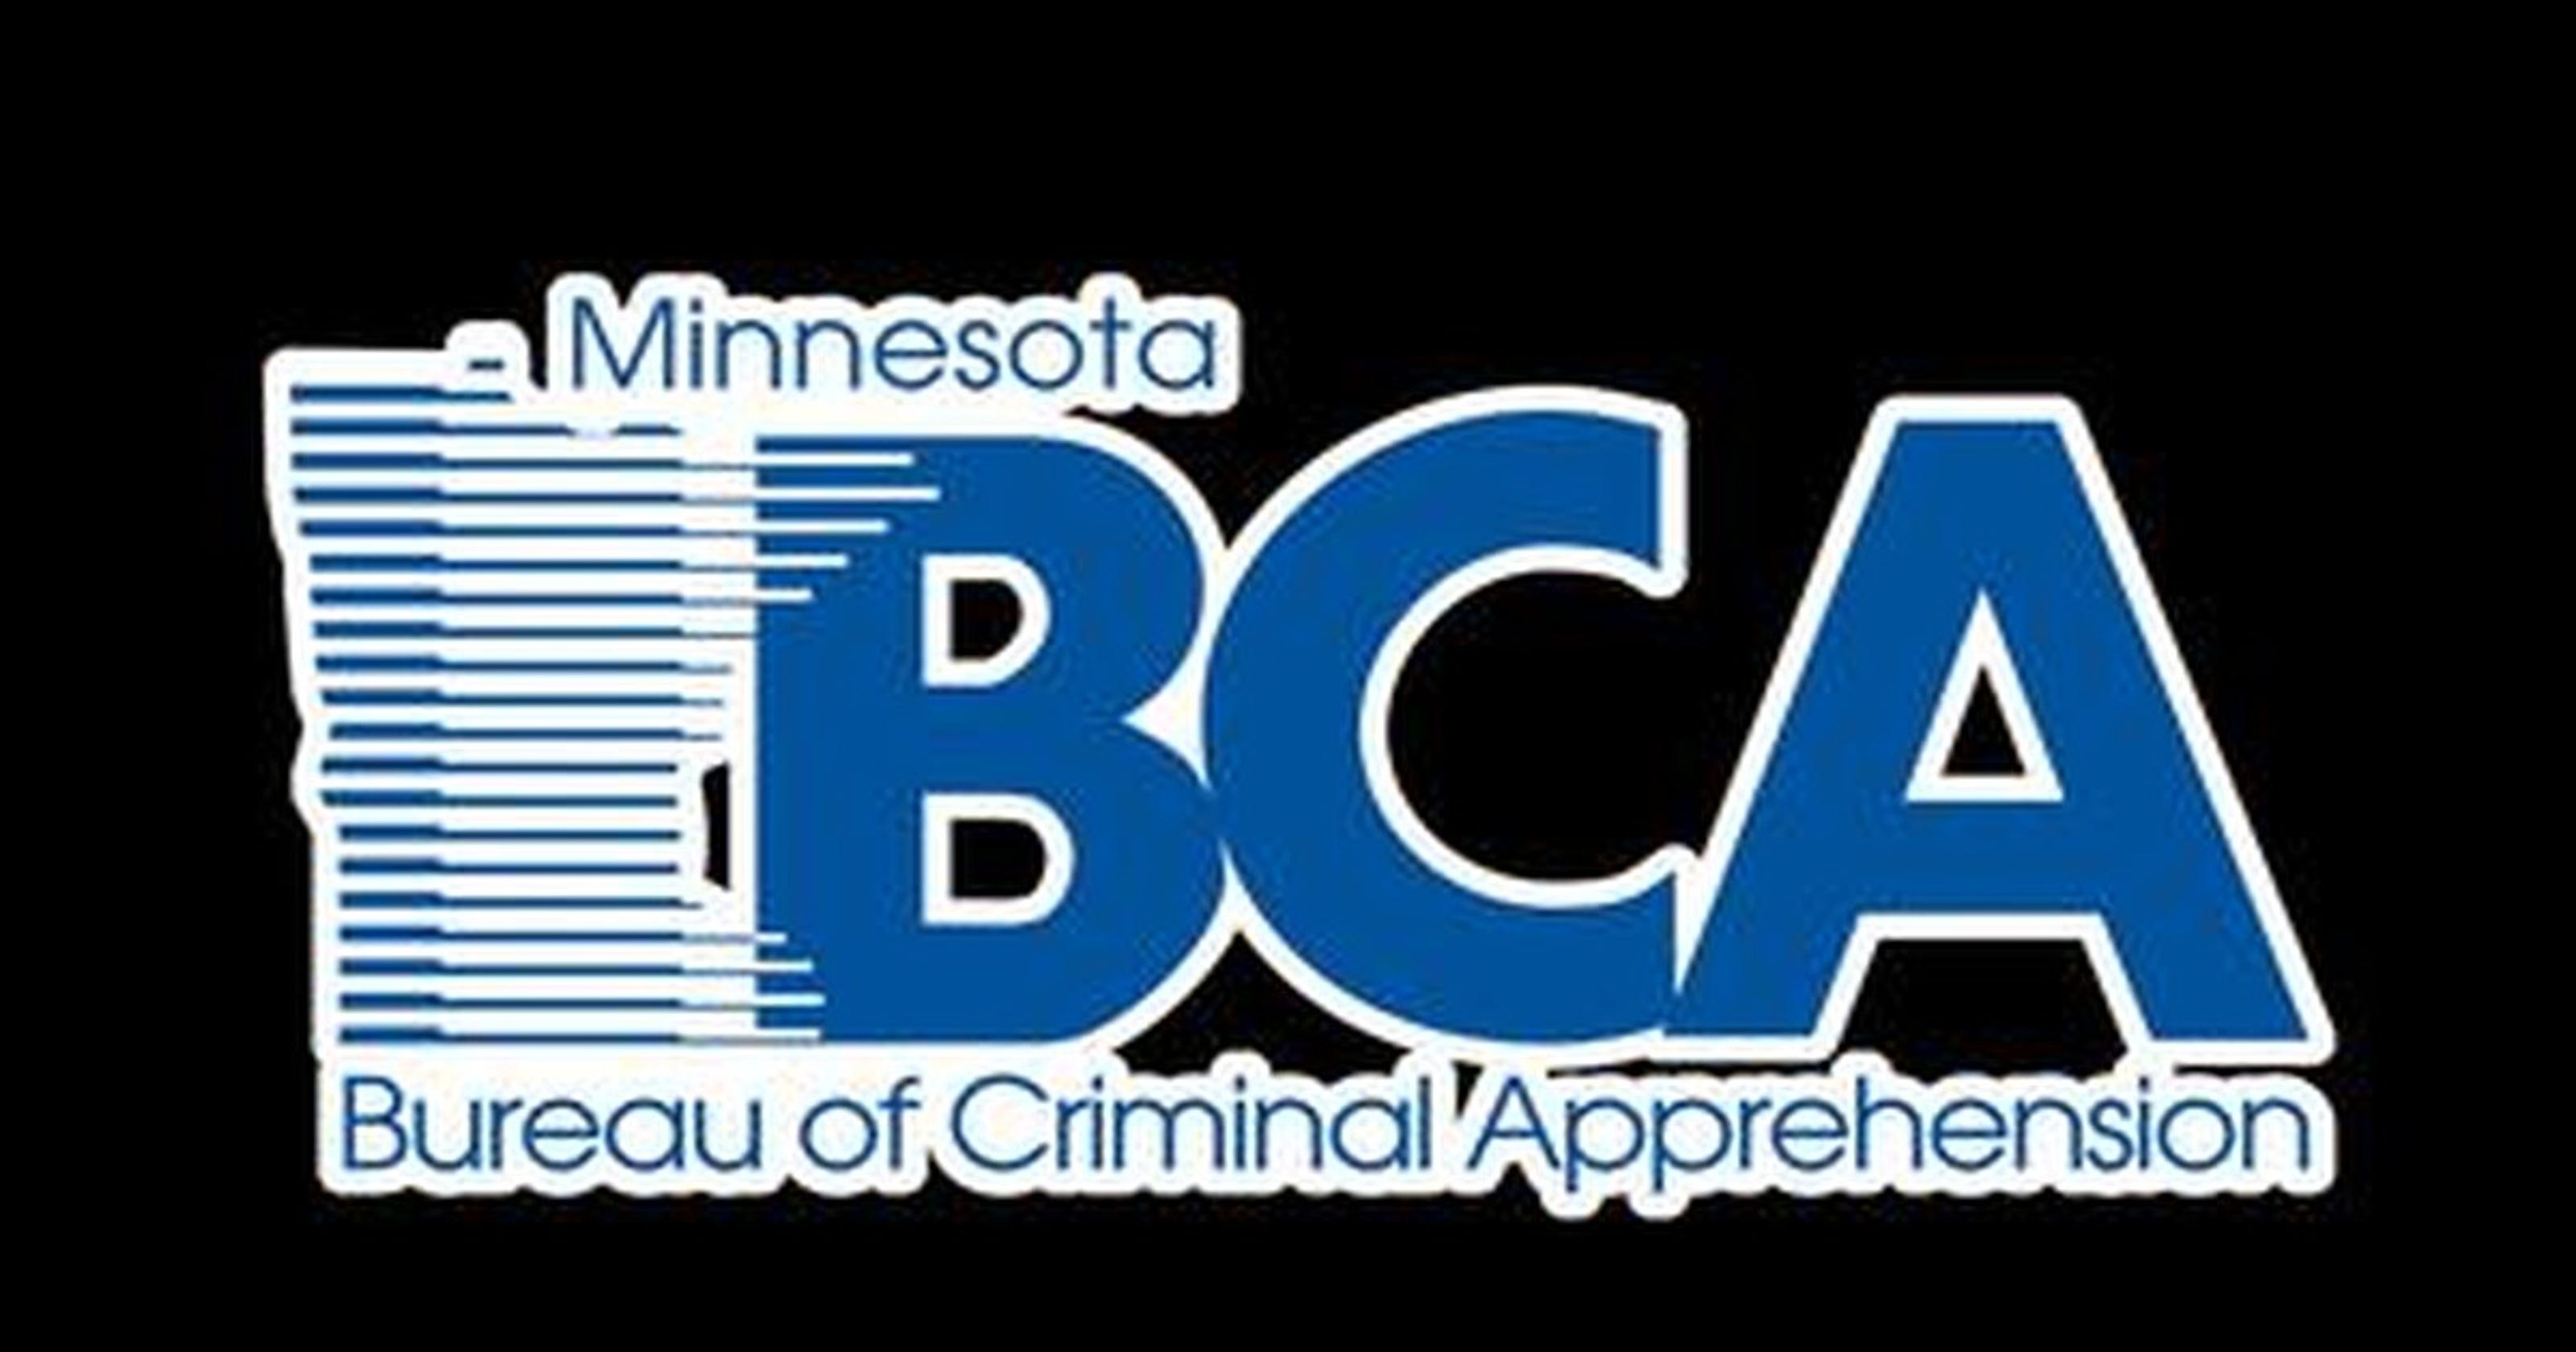 BCA to test Minnesota officersafety alert system Thursday